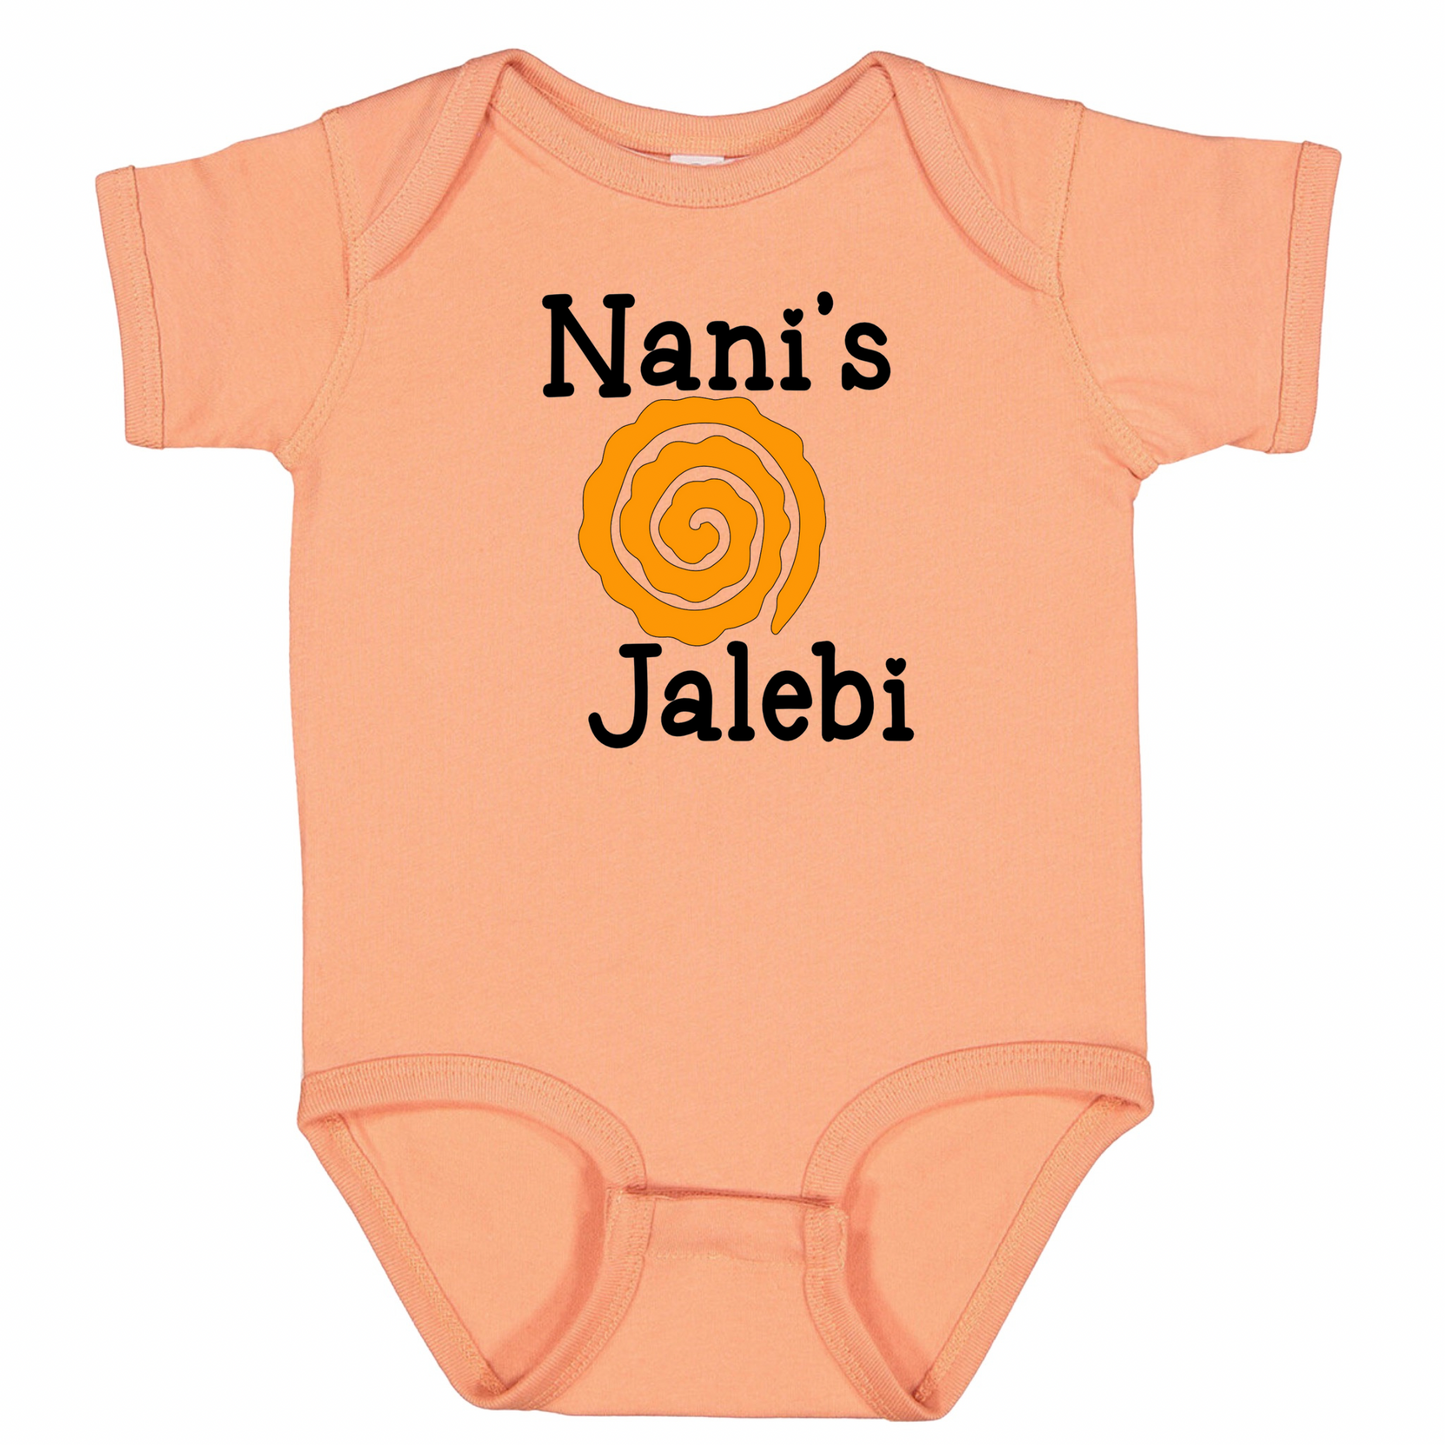 NANI’S JALEBI (Black Font) - Short Sleeve Onesie